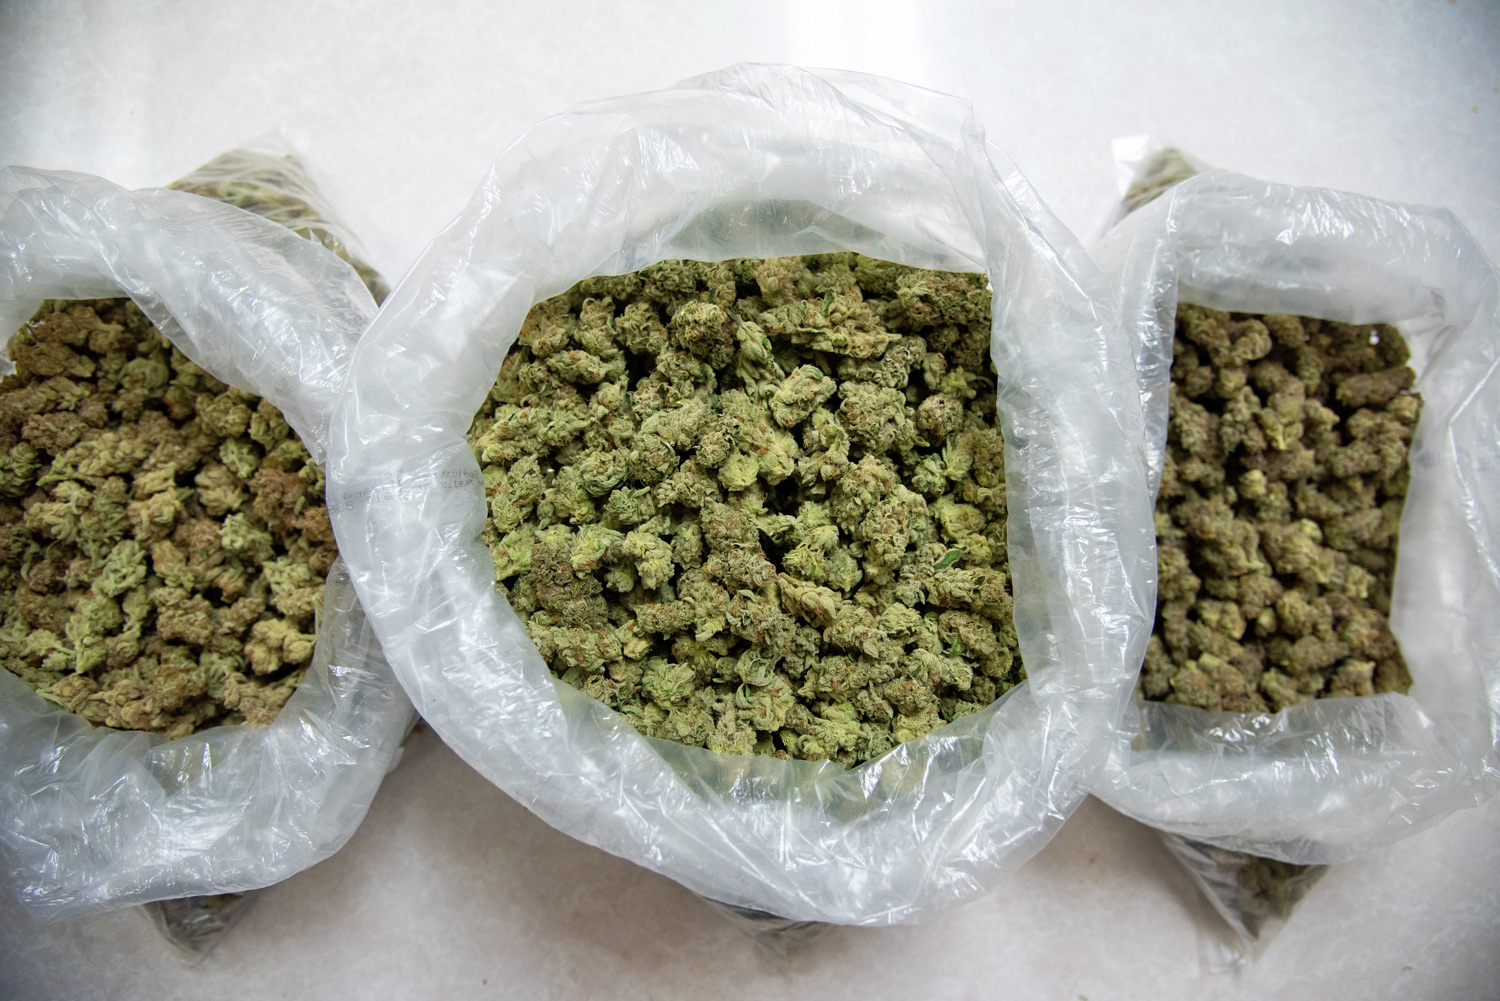 Bags of weed